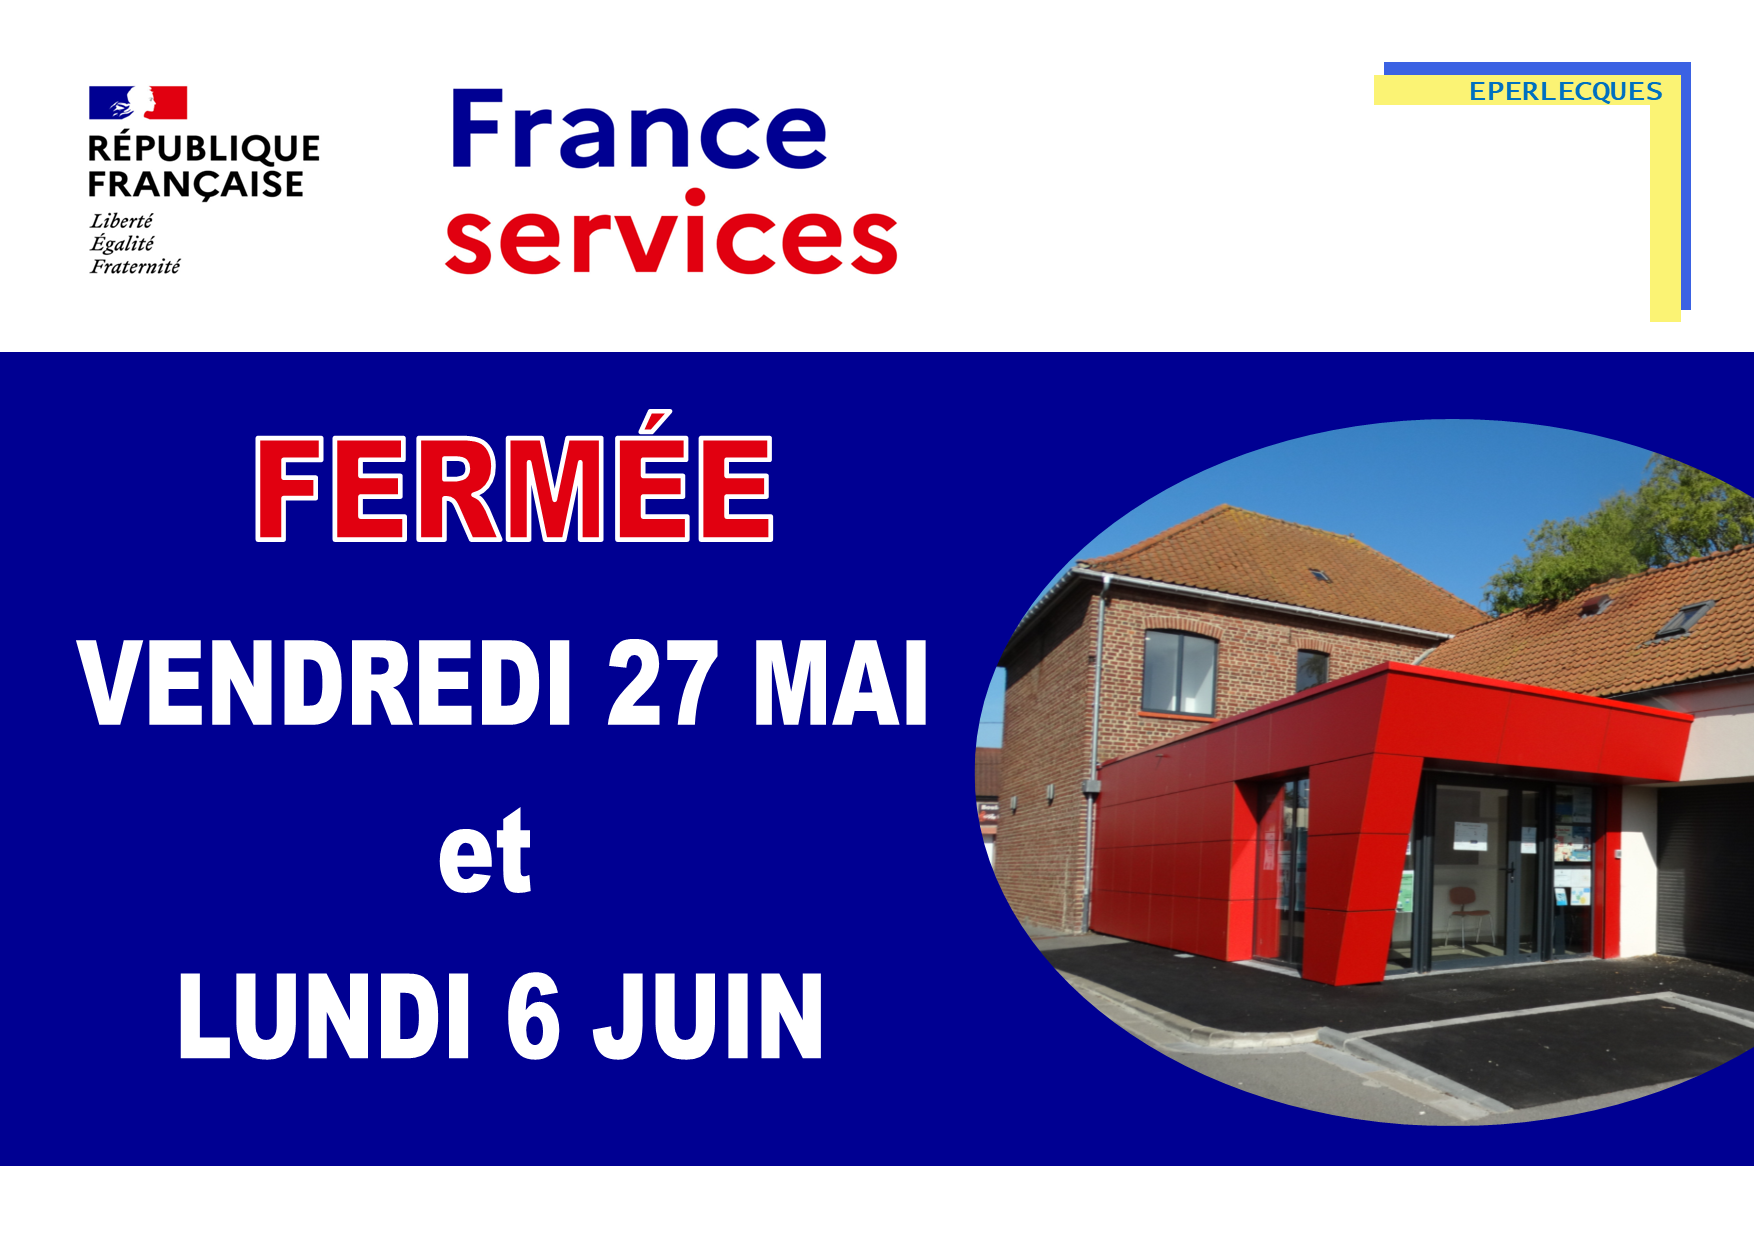 France service fermee